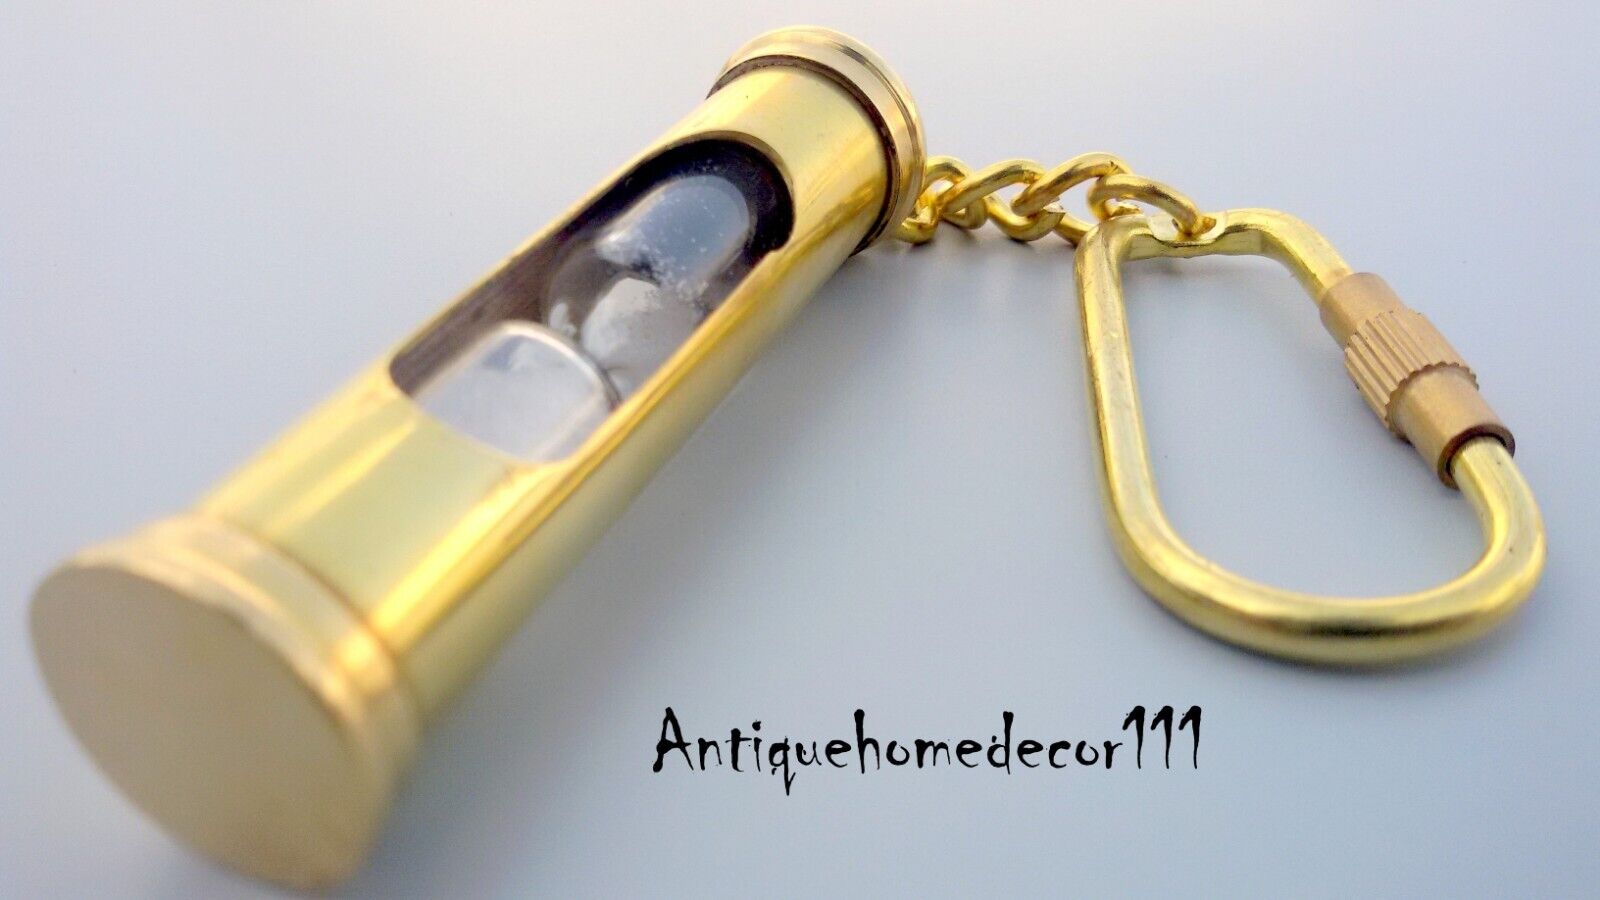 Antique Brass Decorative Sand timer Key Chain Nautical keychain Best Gift